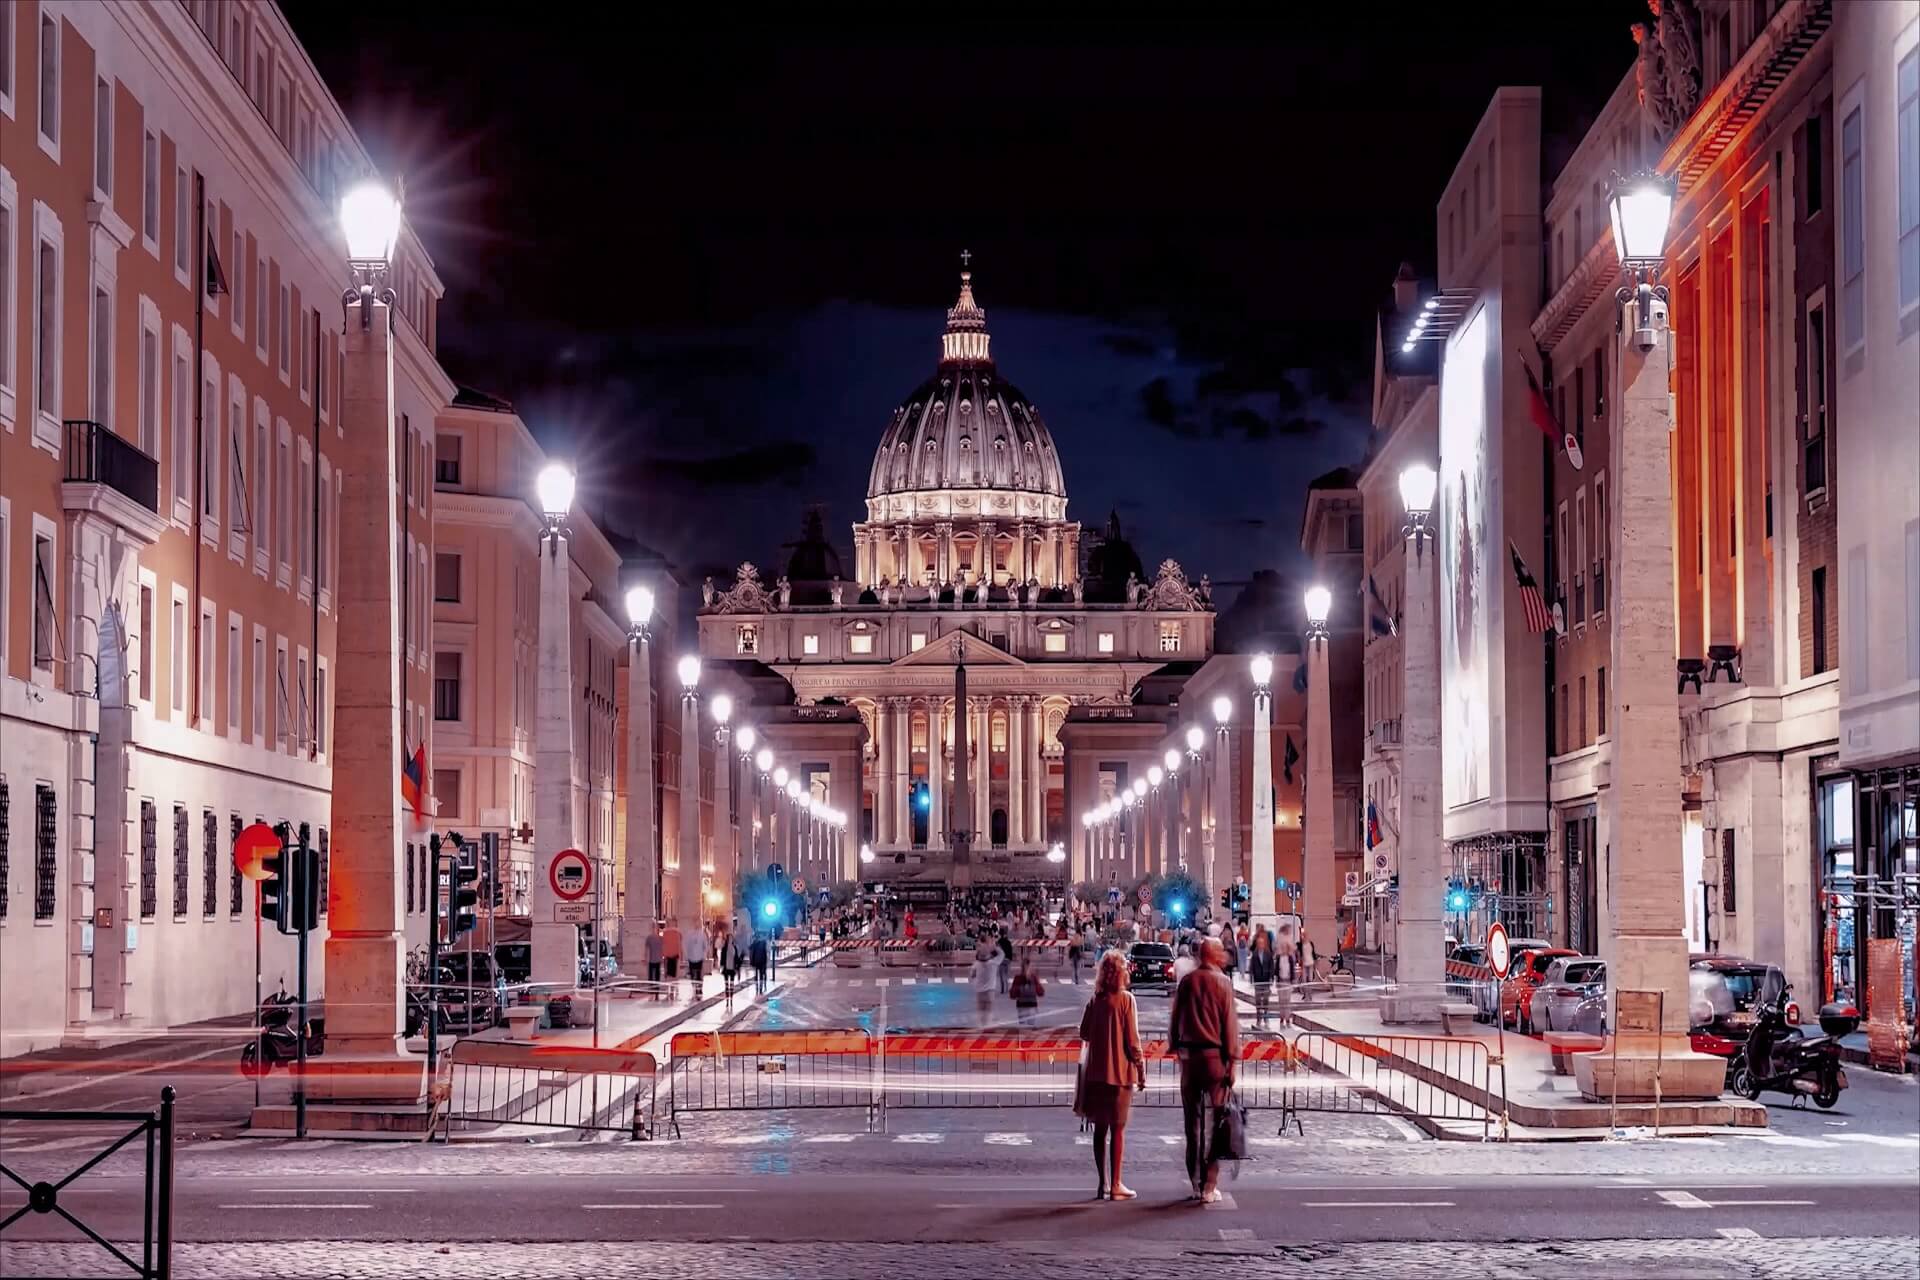 St. Peter's Basilica in Vatican, Italy